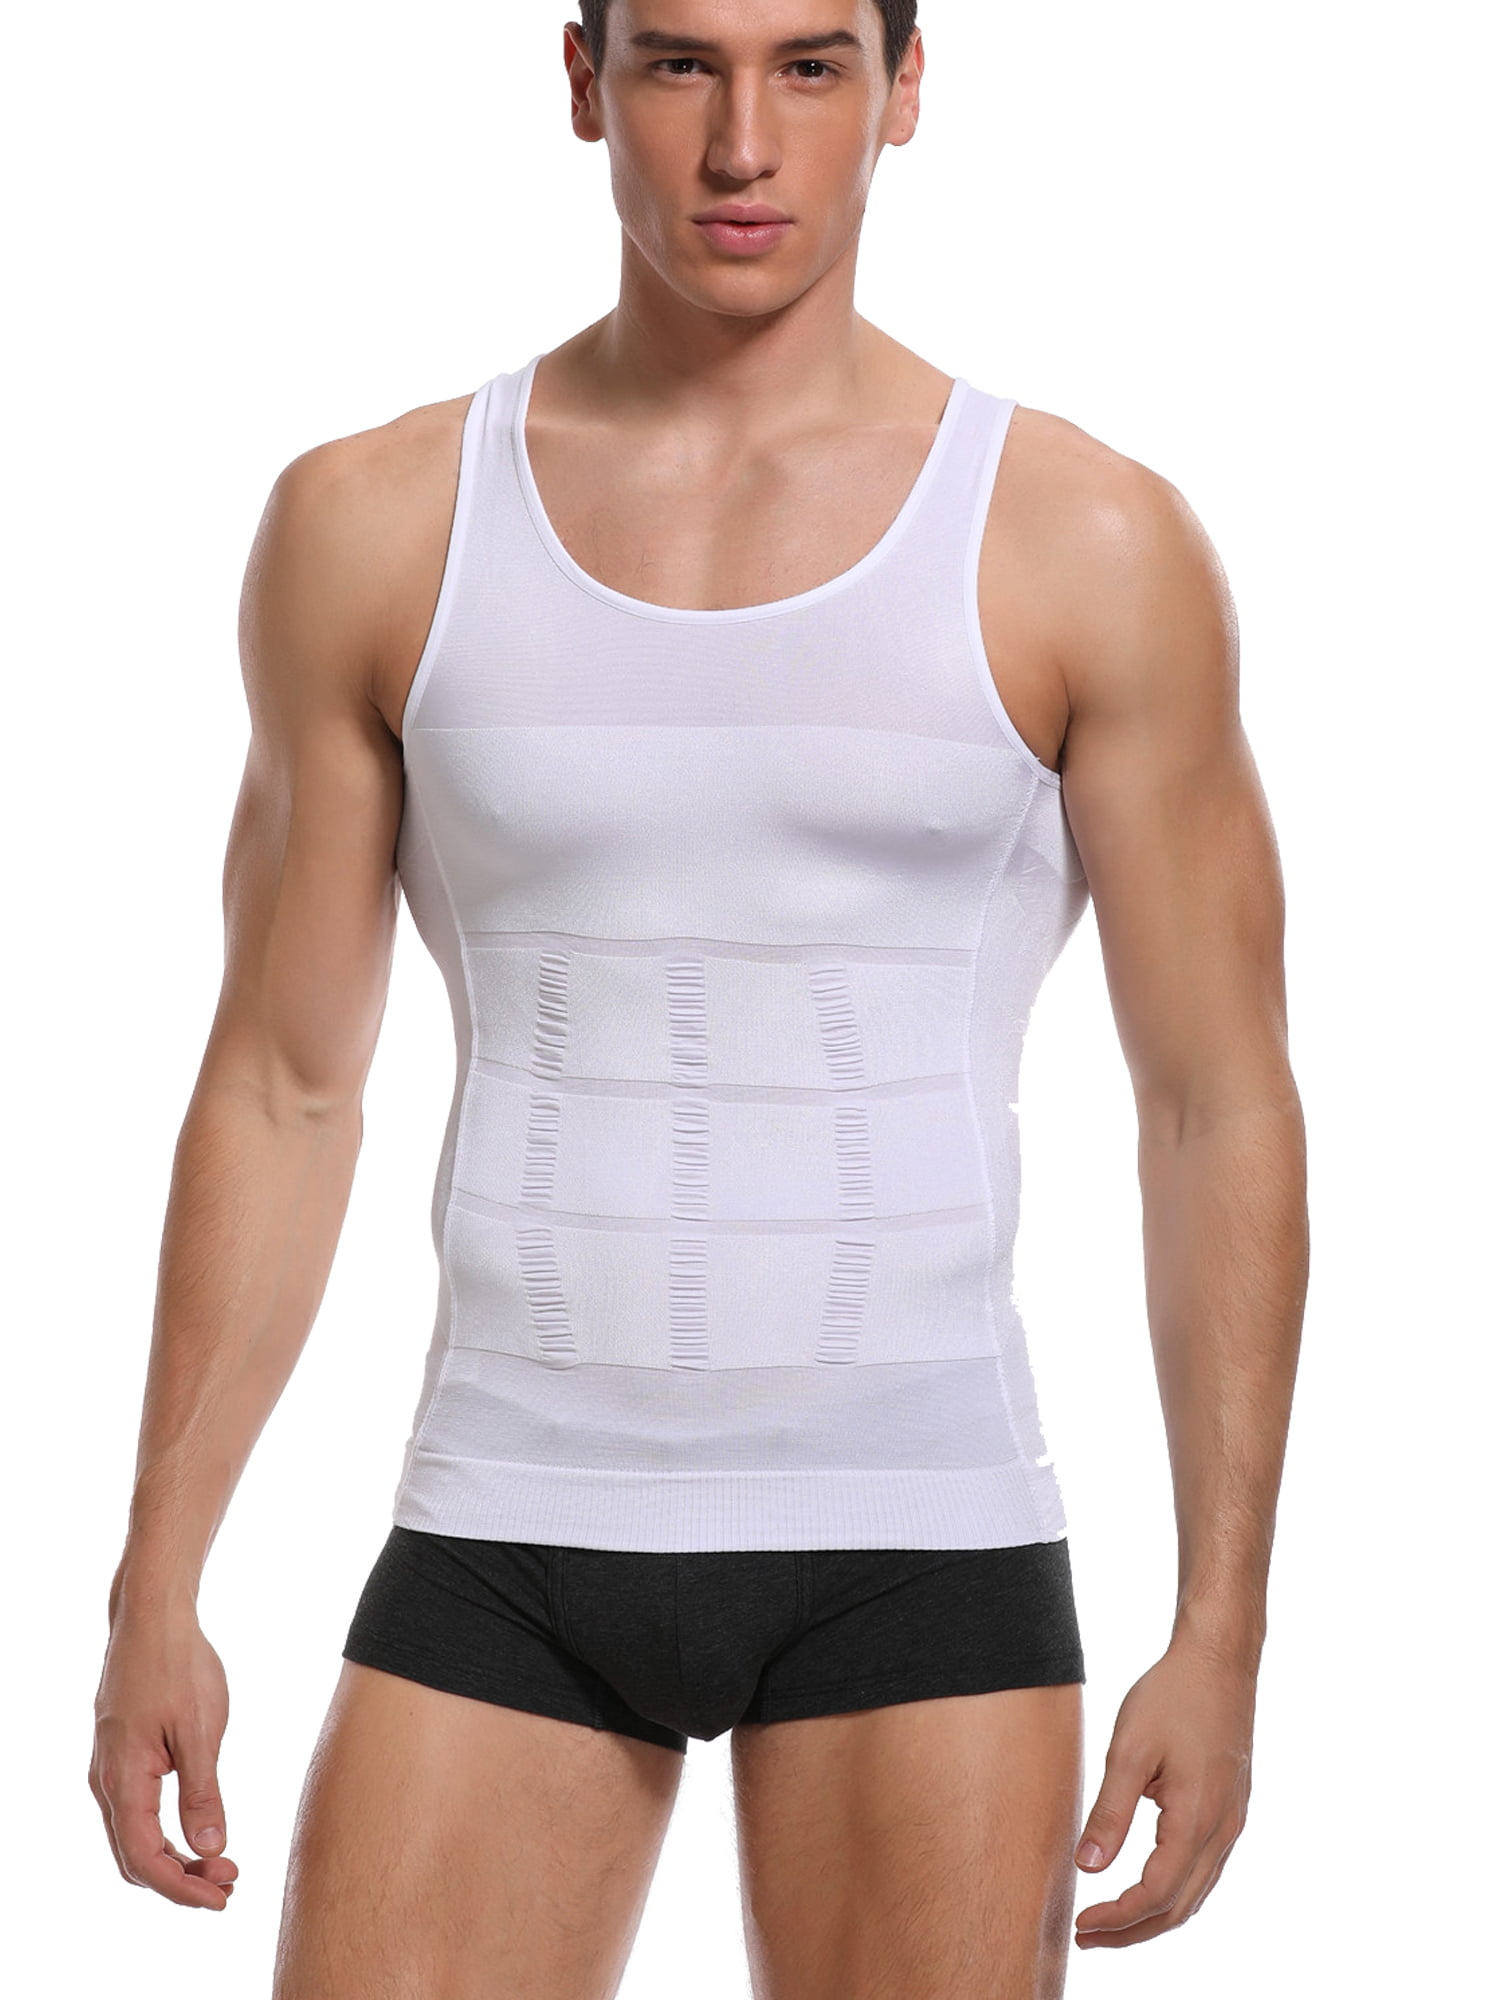 QRIC - QRIC Men's Slim Body Shaper Vests Shirt Abs Abdomen Slimming ...